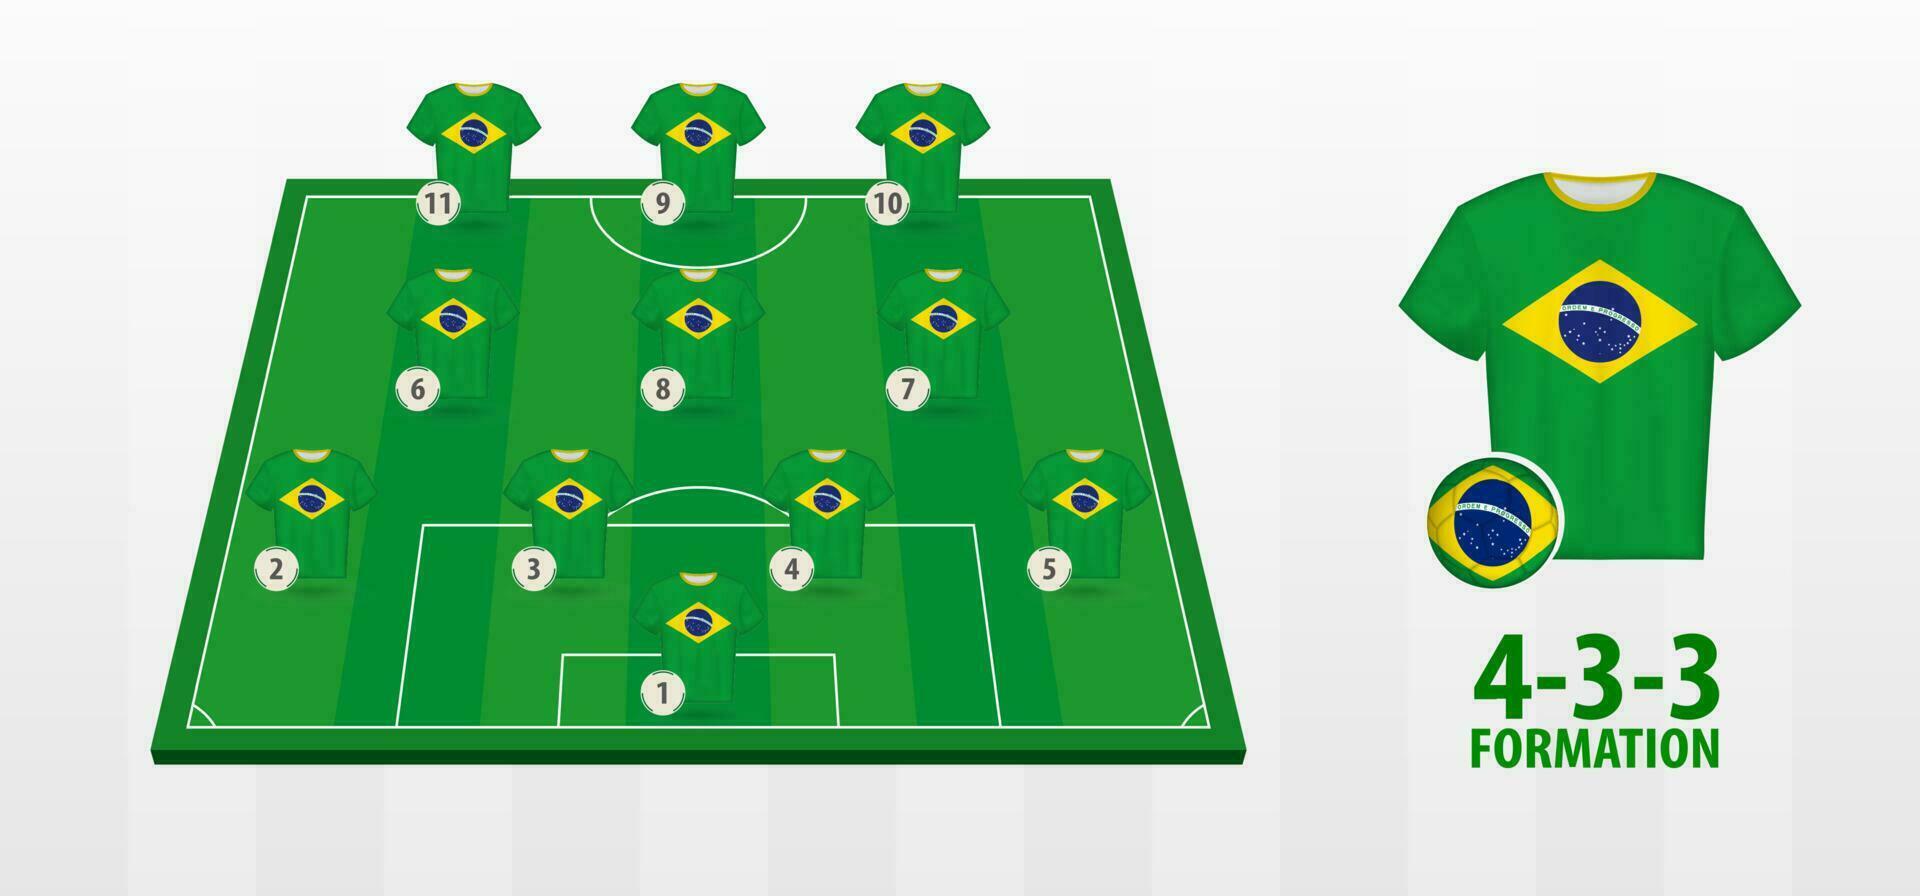 Brasilien National Fußball Mannschaft Formation auf Fußball Feld. vektor